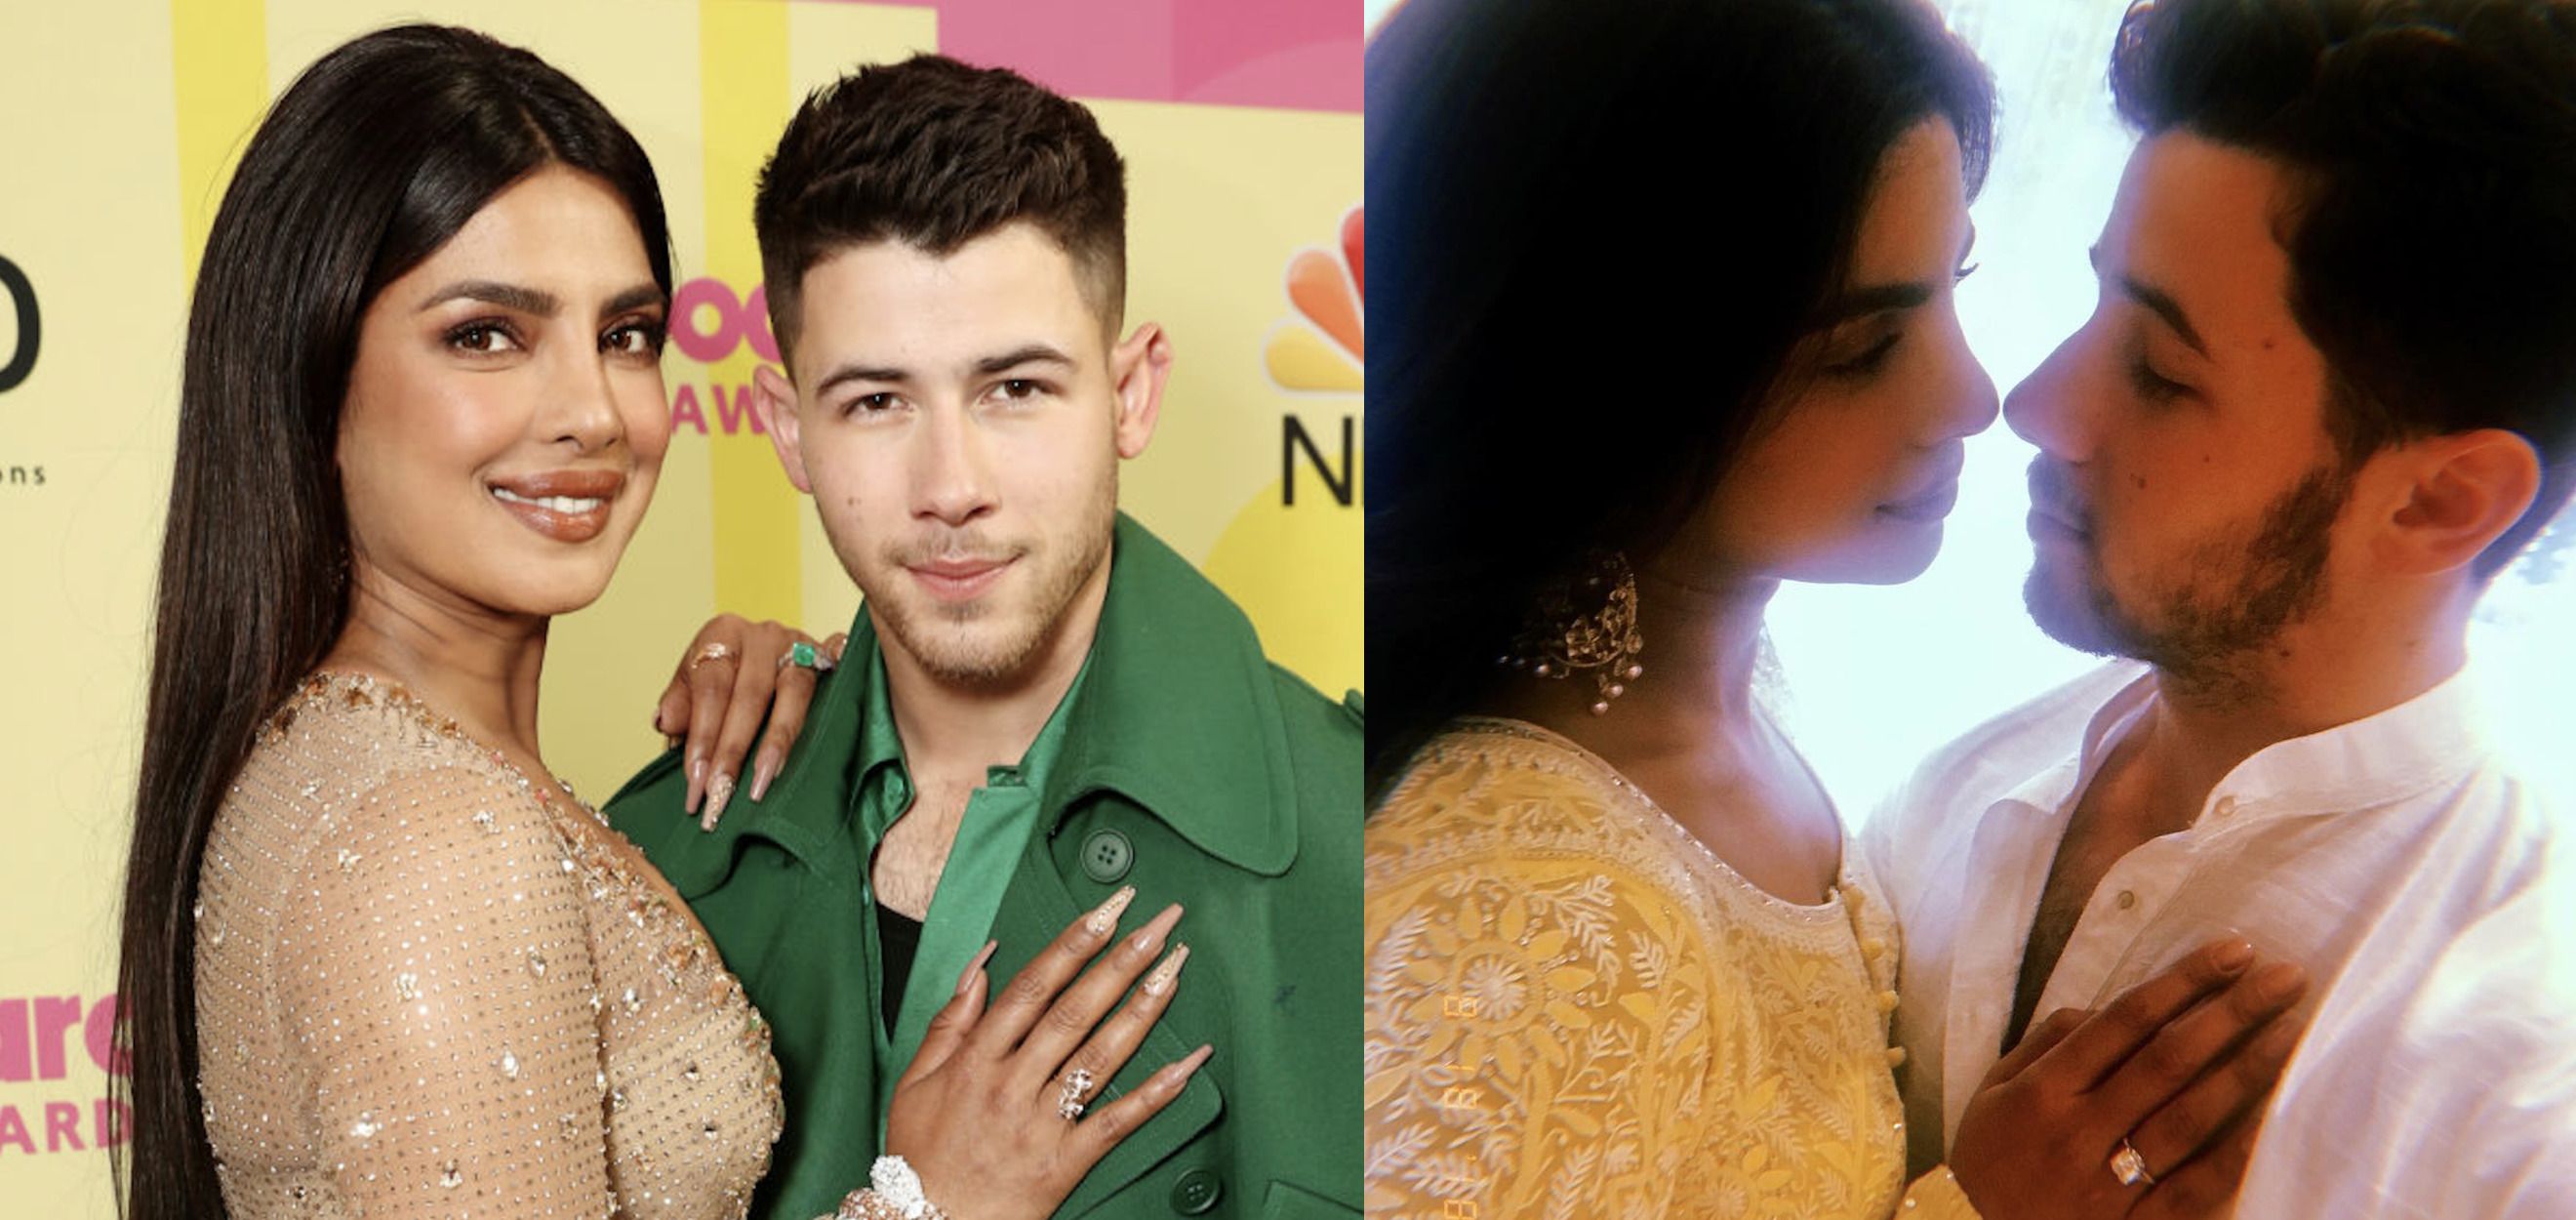 Priyanka Chopra and Nick Jonas are now wearing matching gold rings